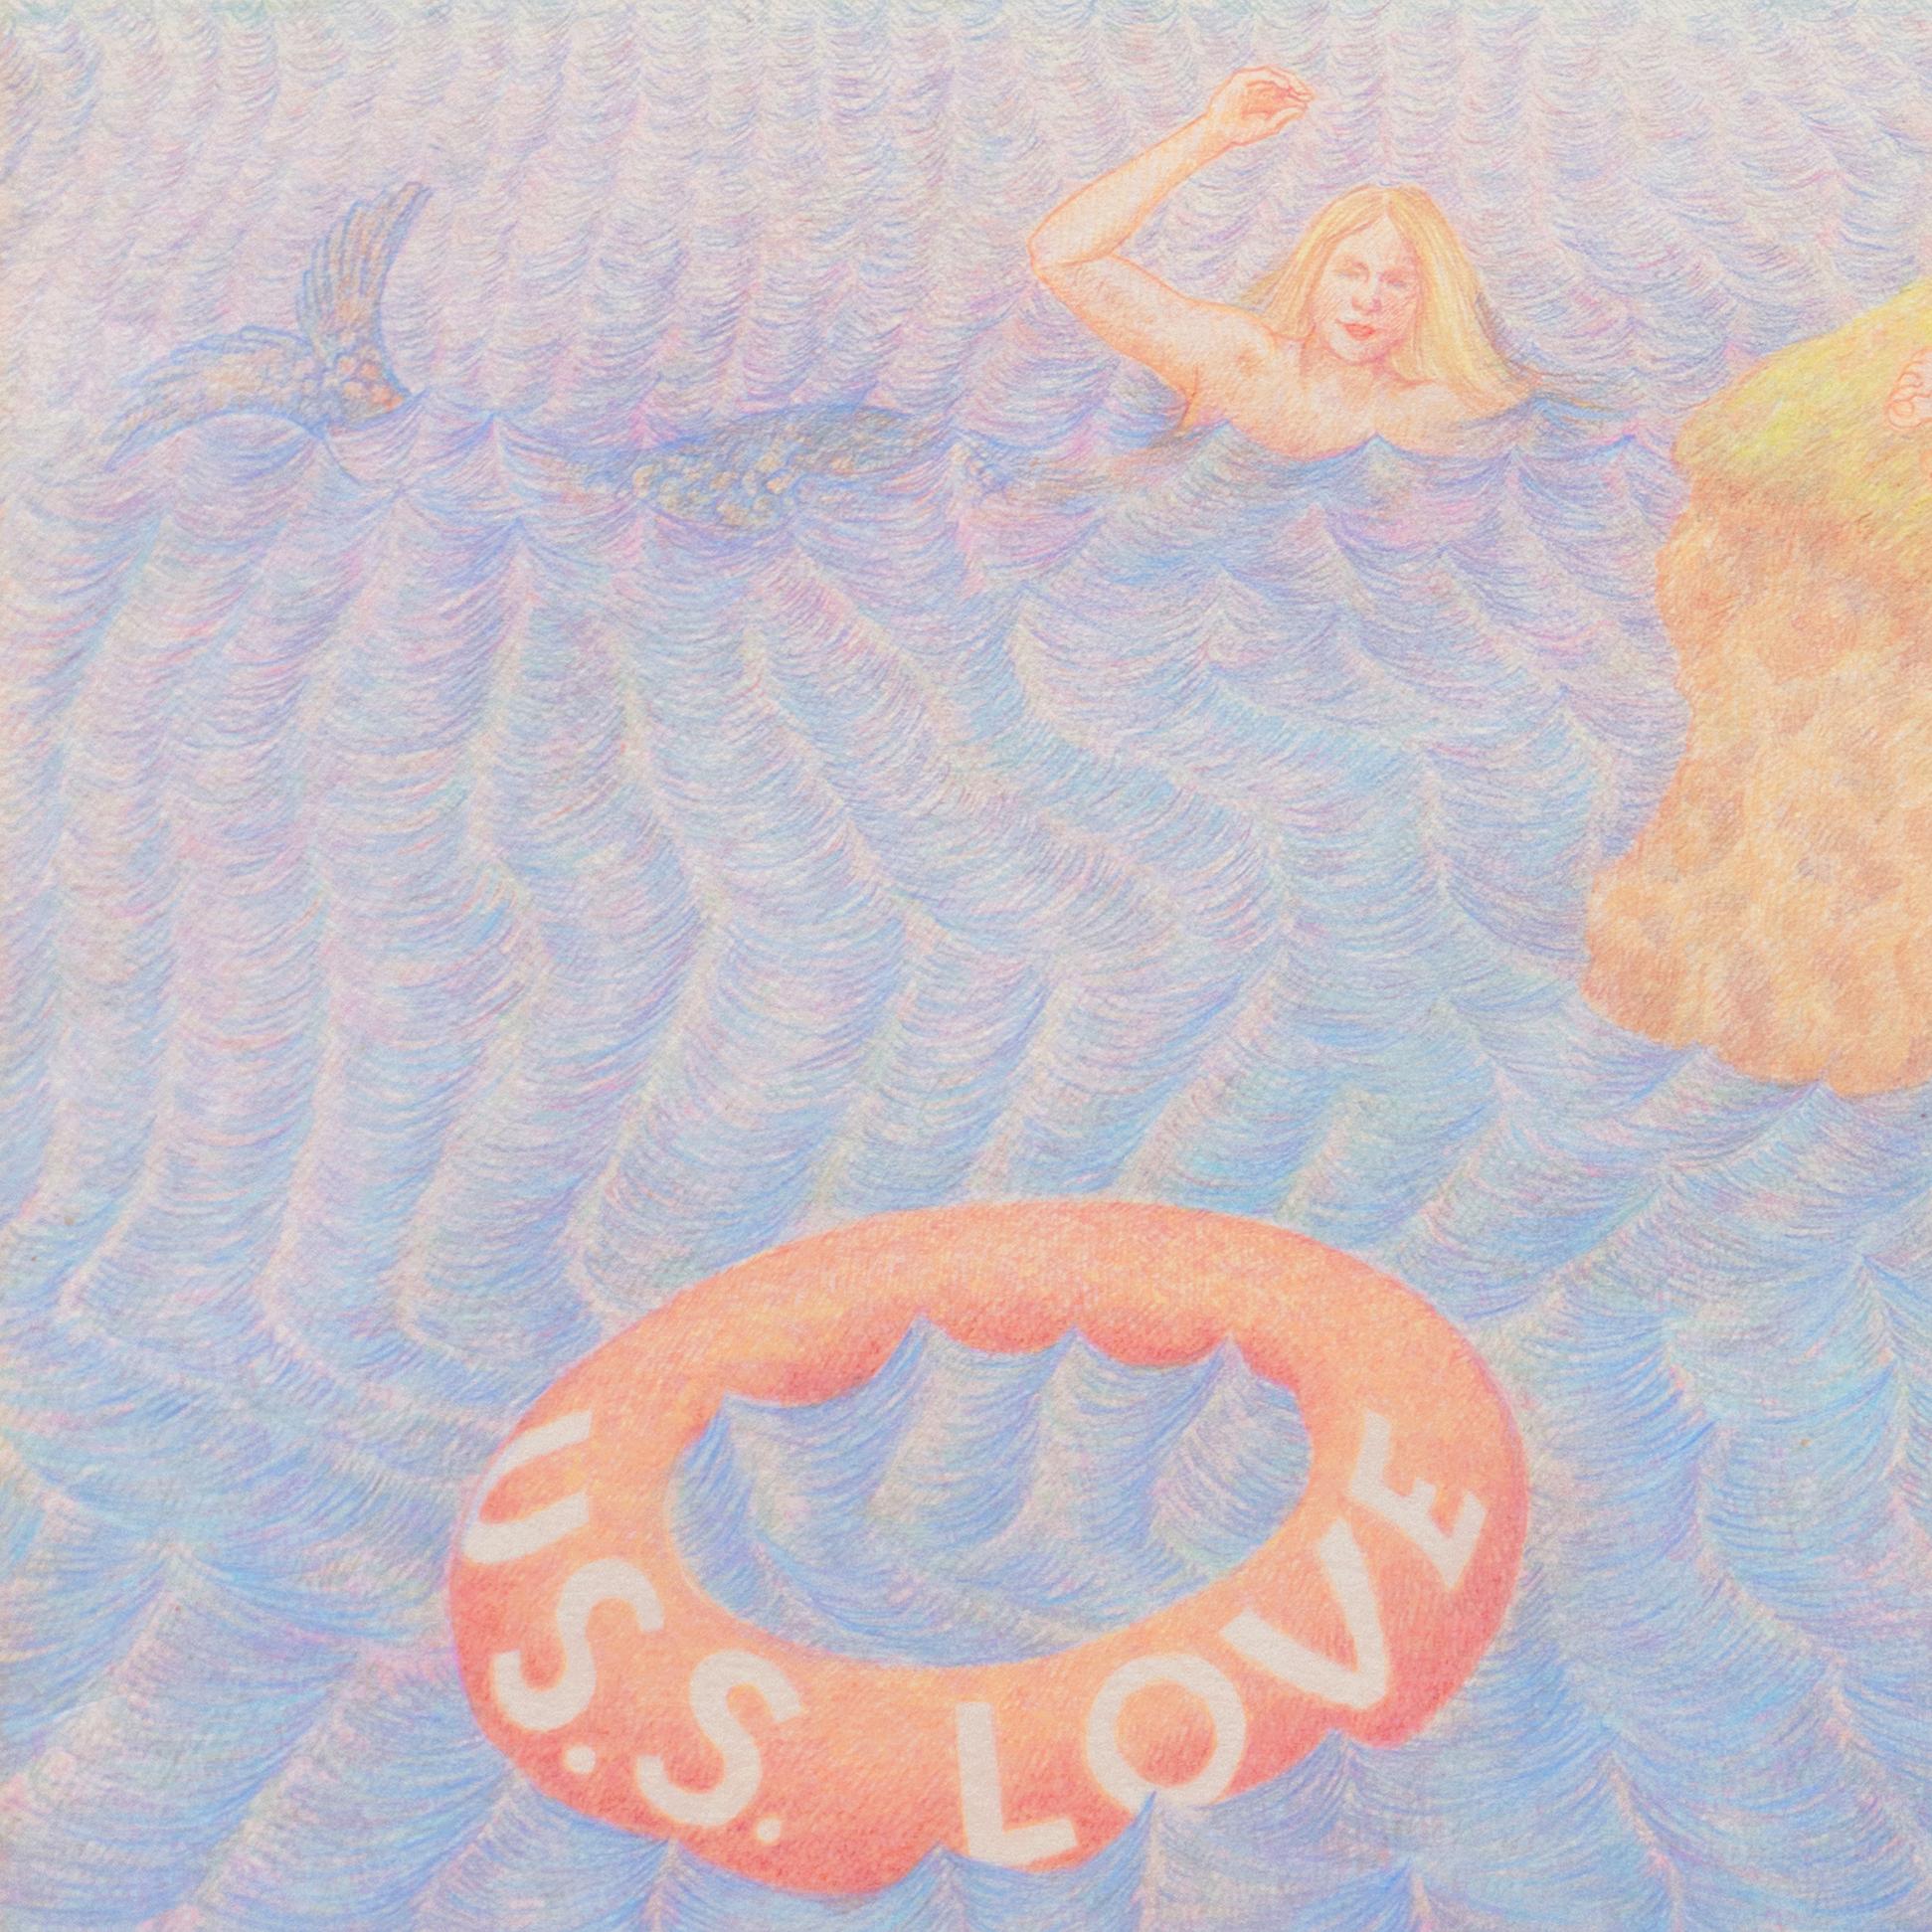 'U.S.S. Love', Swimming with Mermaids, Merman - Surrealist Art by Roberta Loach